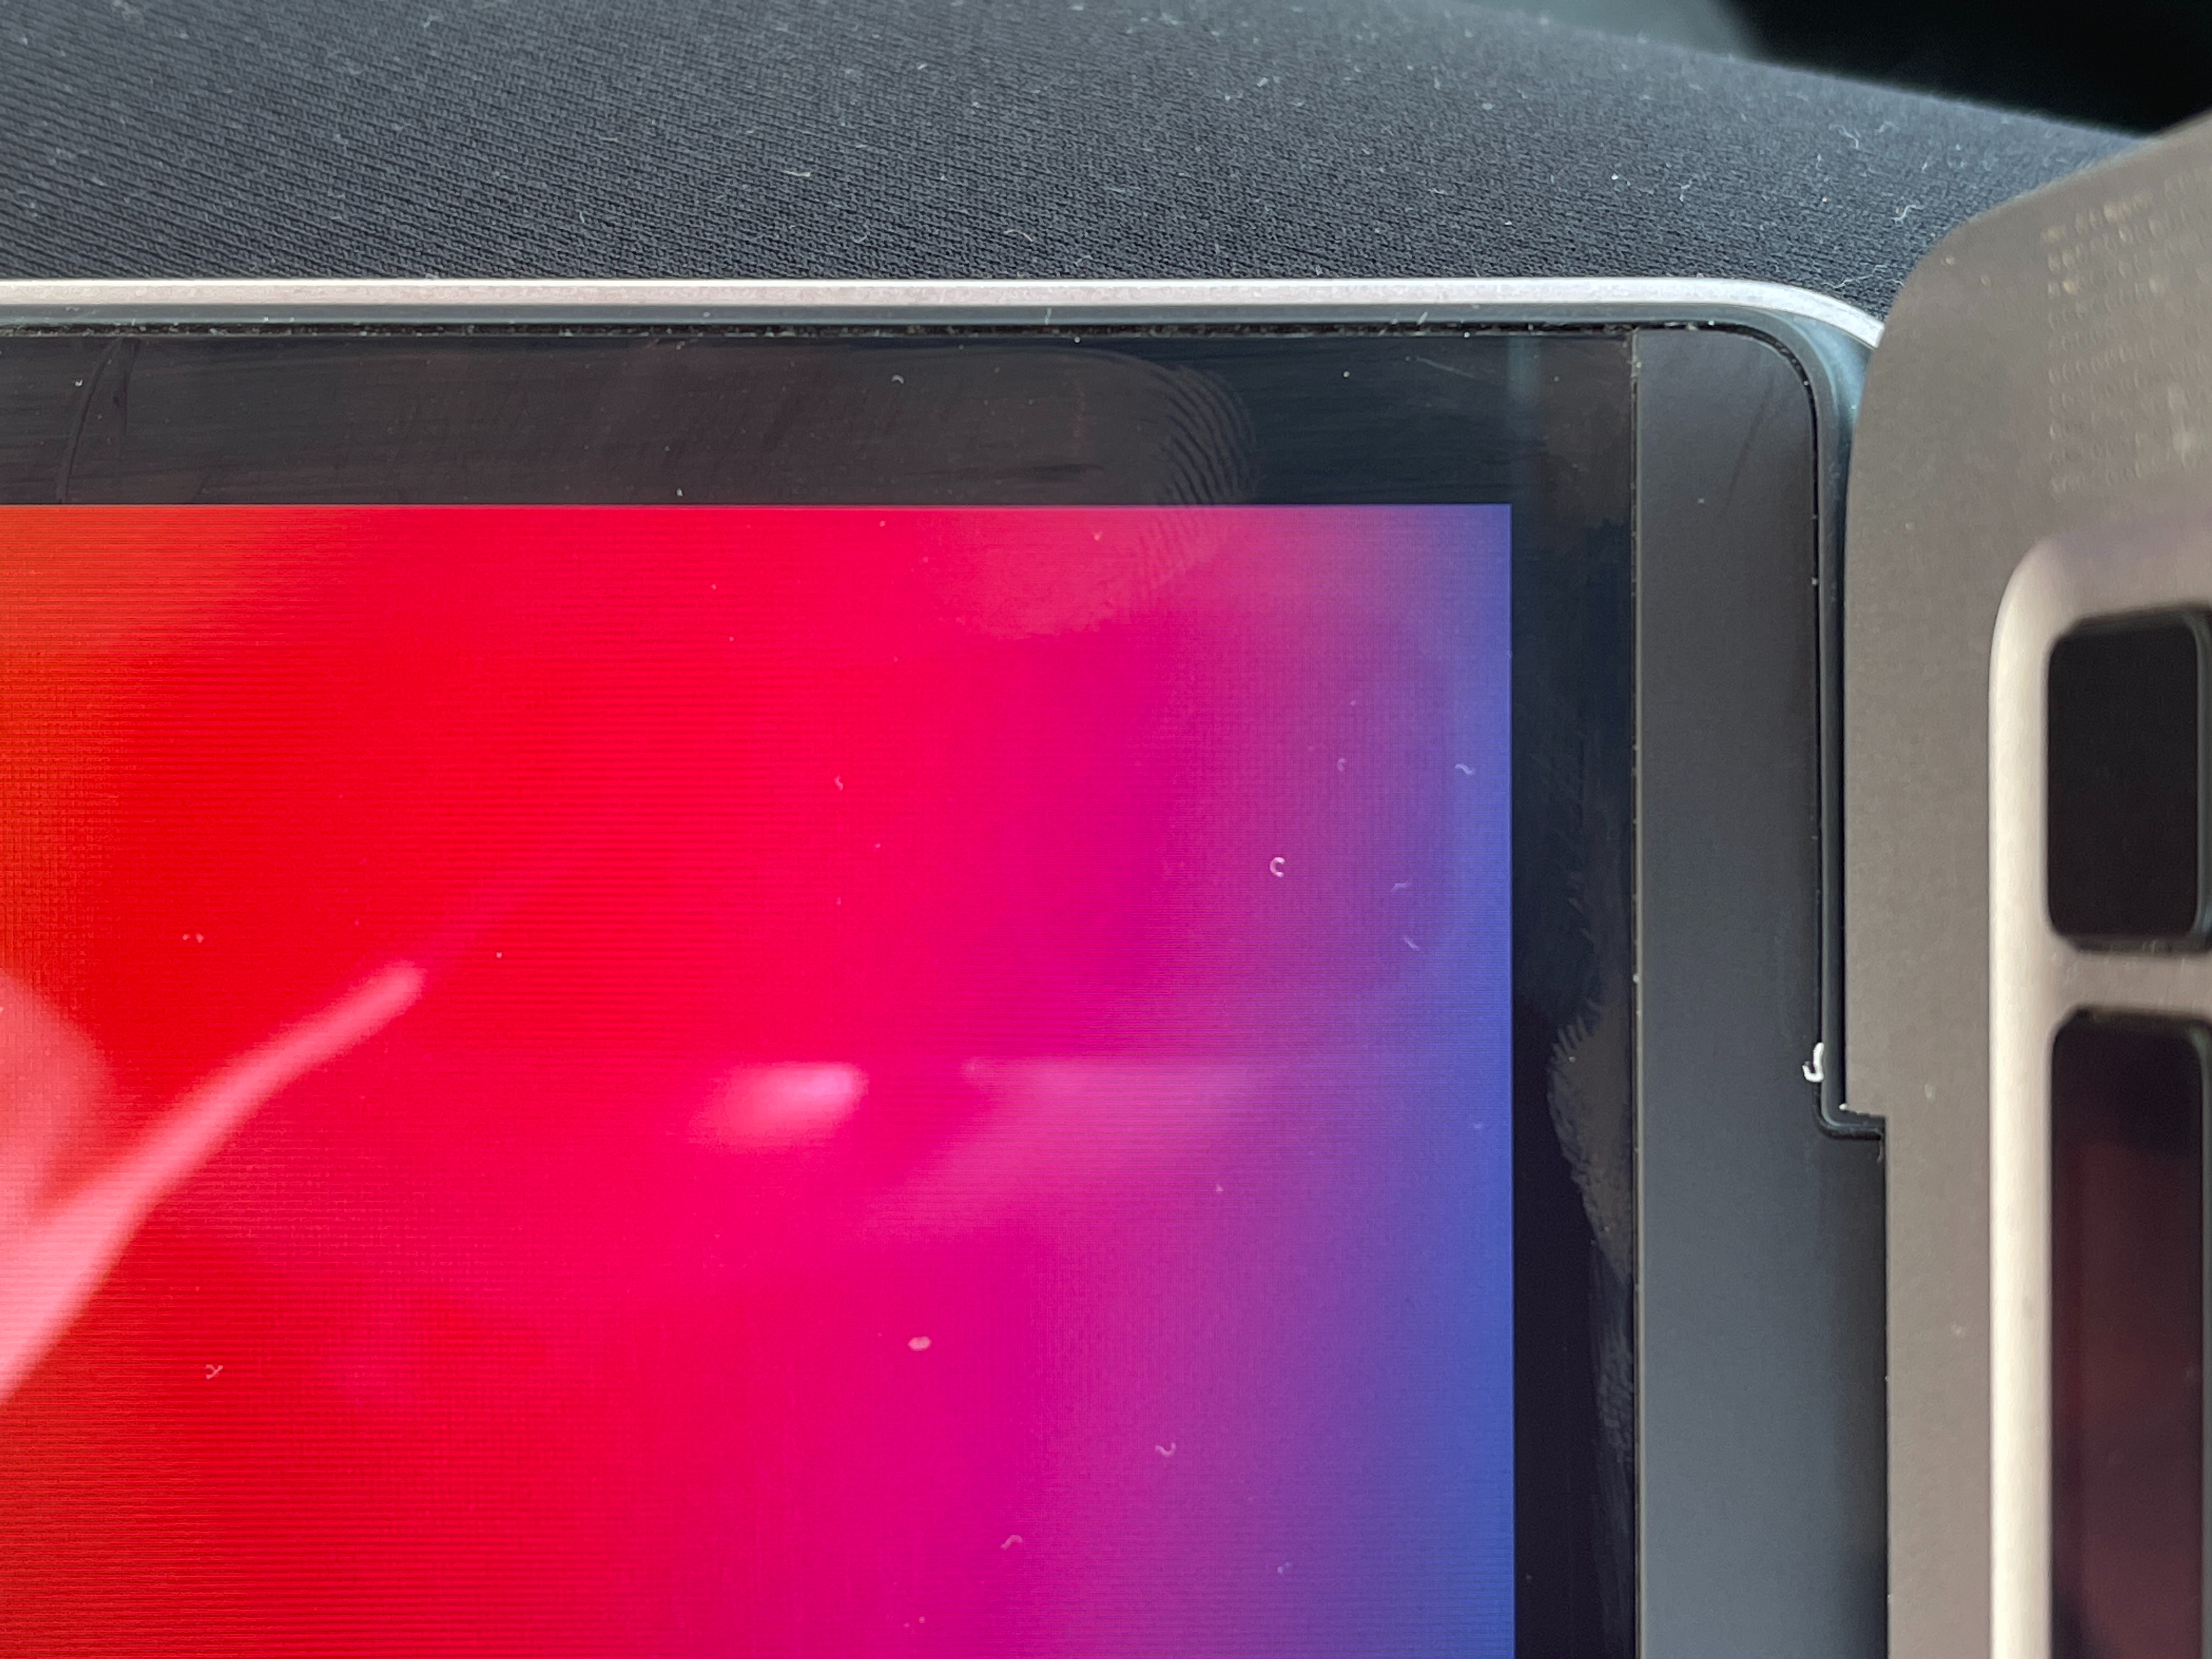 terug geboren neutrale MacBook M1 Pro gap between glass and rubb… - Apple Community